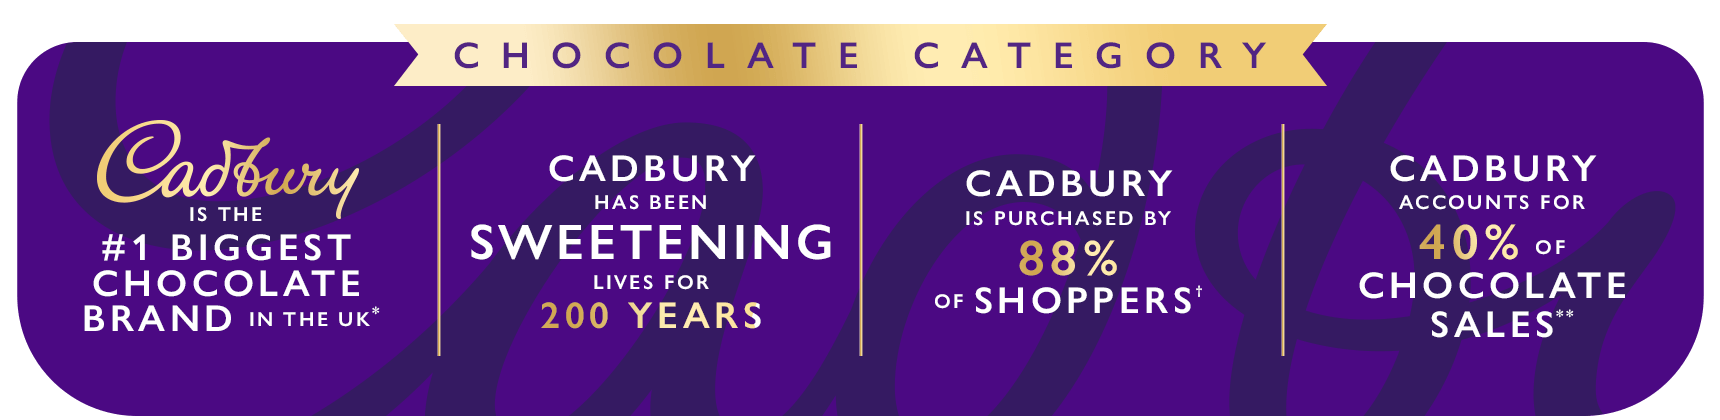 Cadbury chocolate category statistics